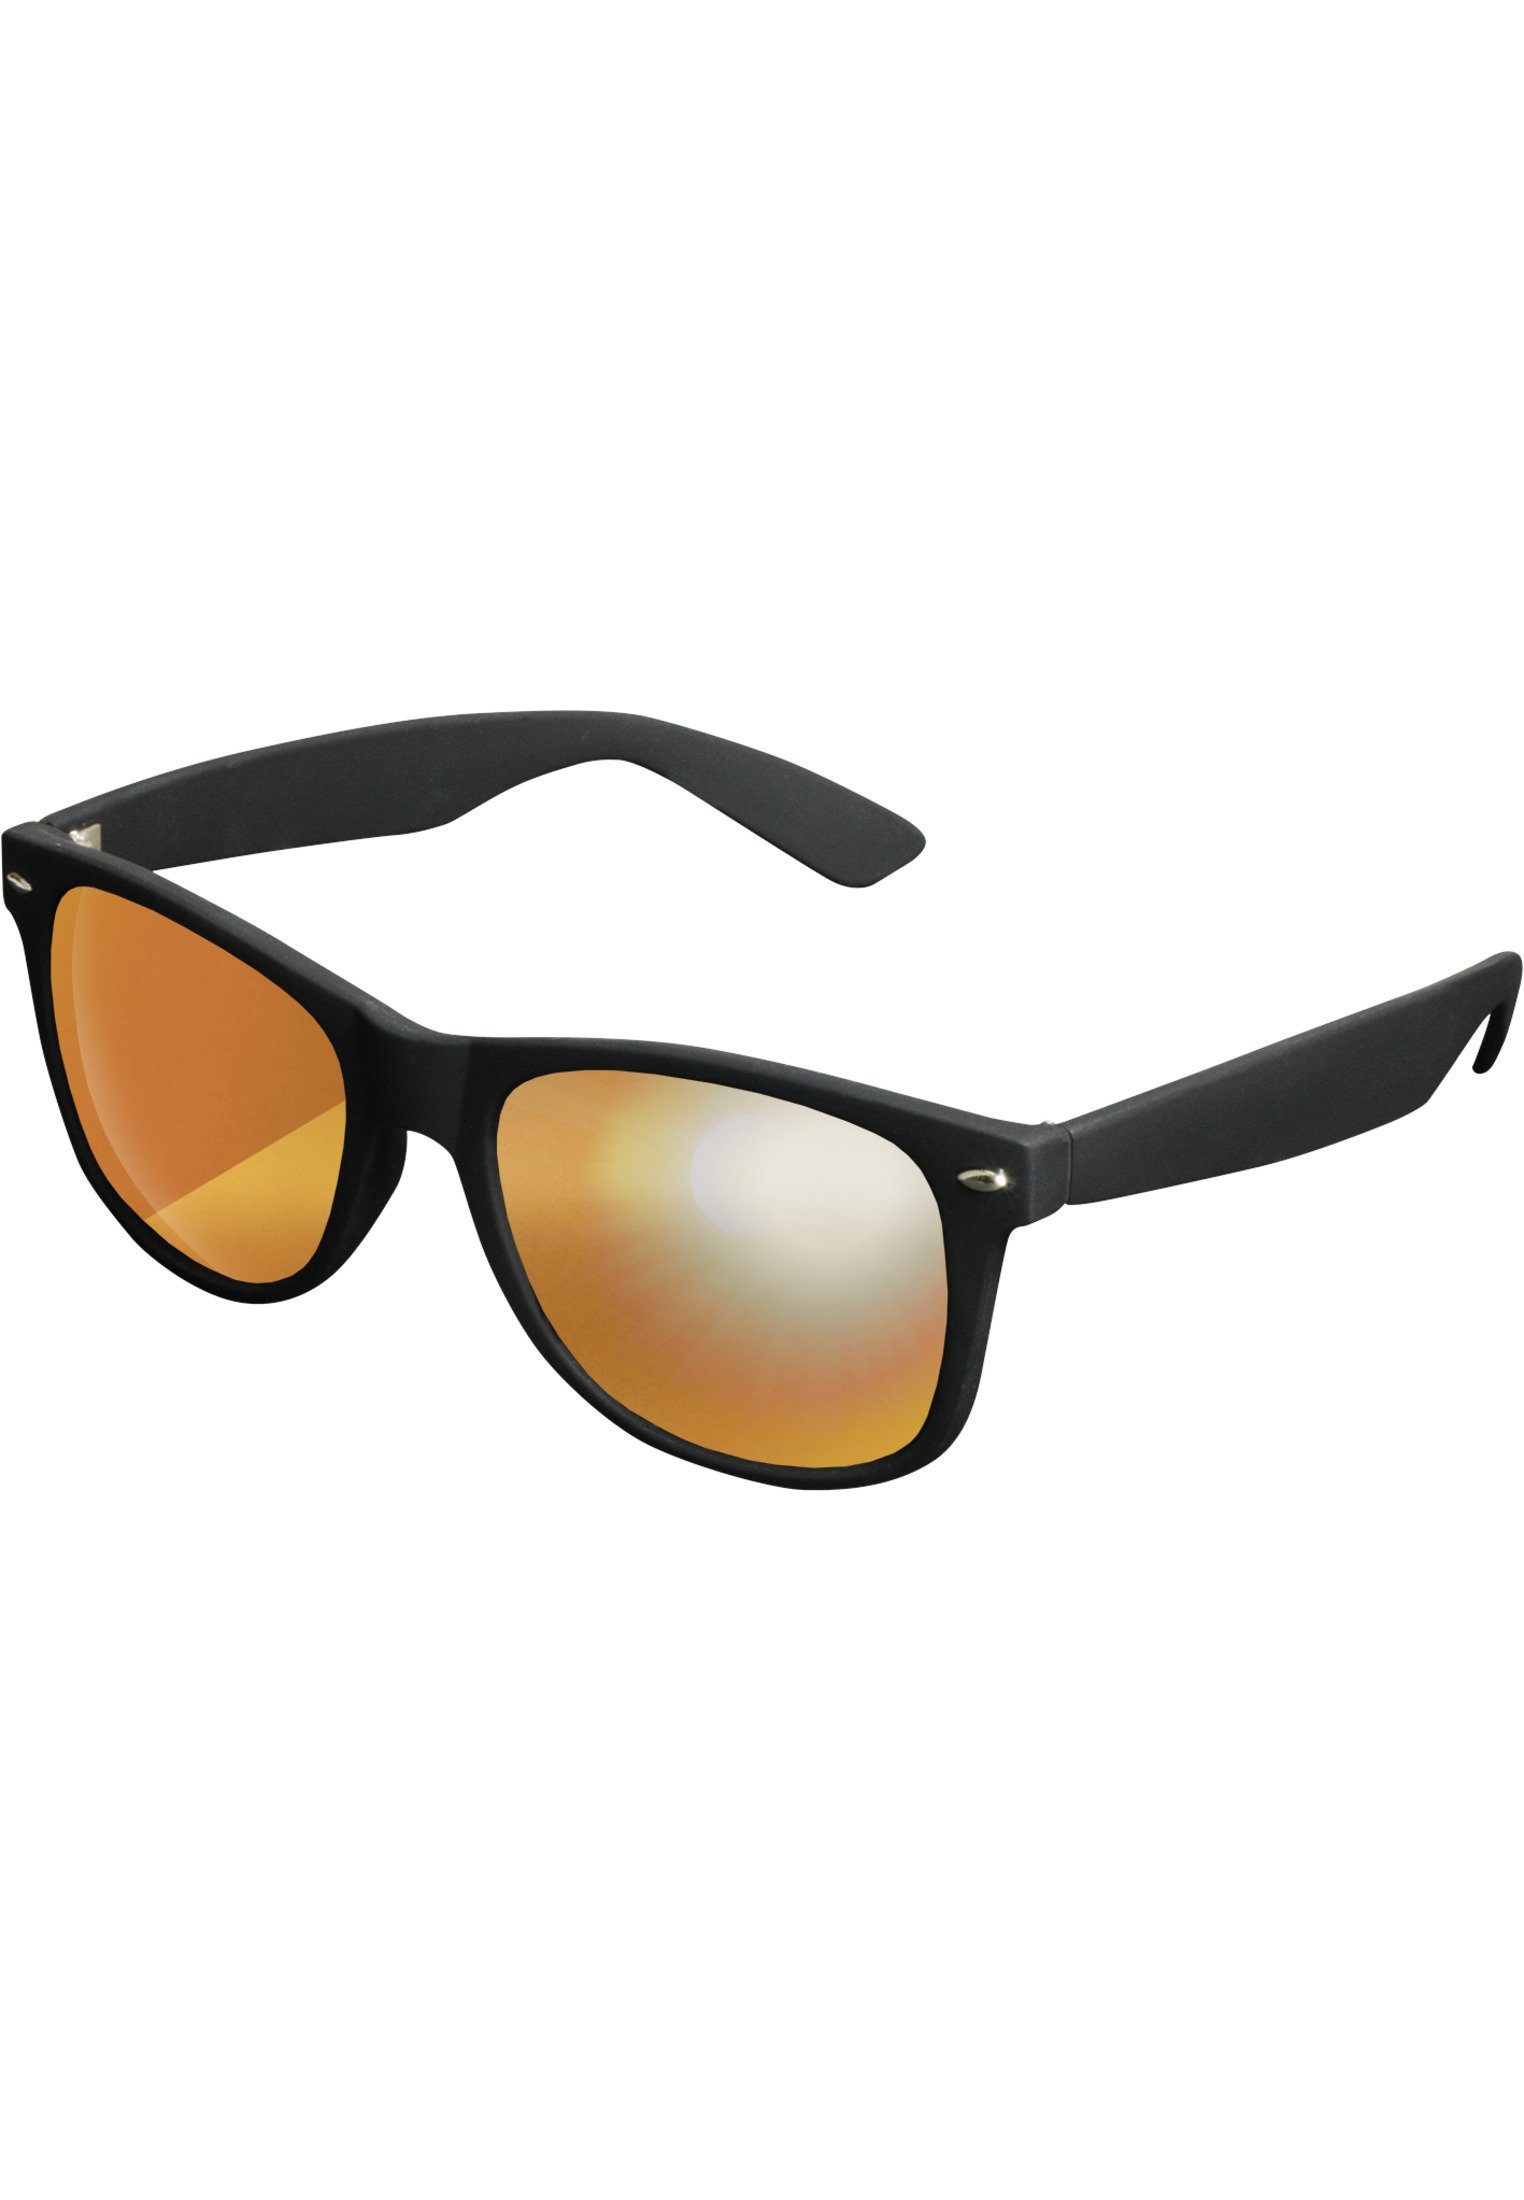 Sunglasses Sonnenbrille Accessoires blk/orange Mirror Likoma MSTRDS